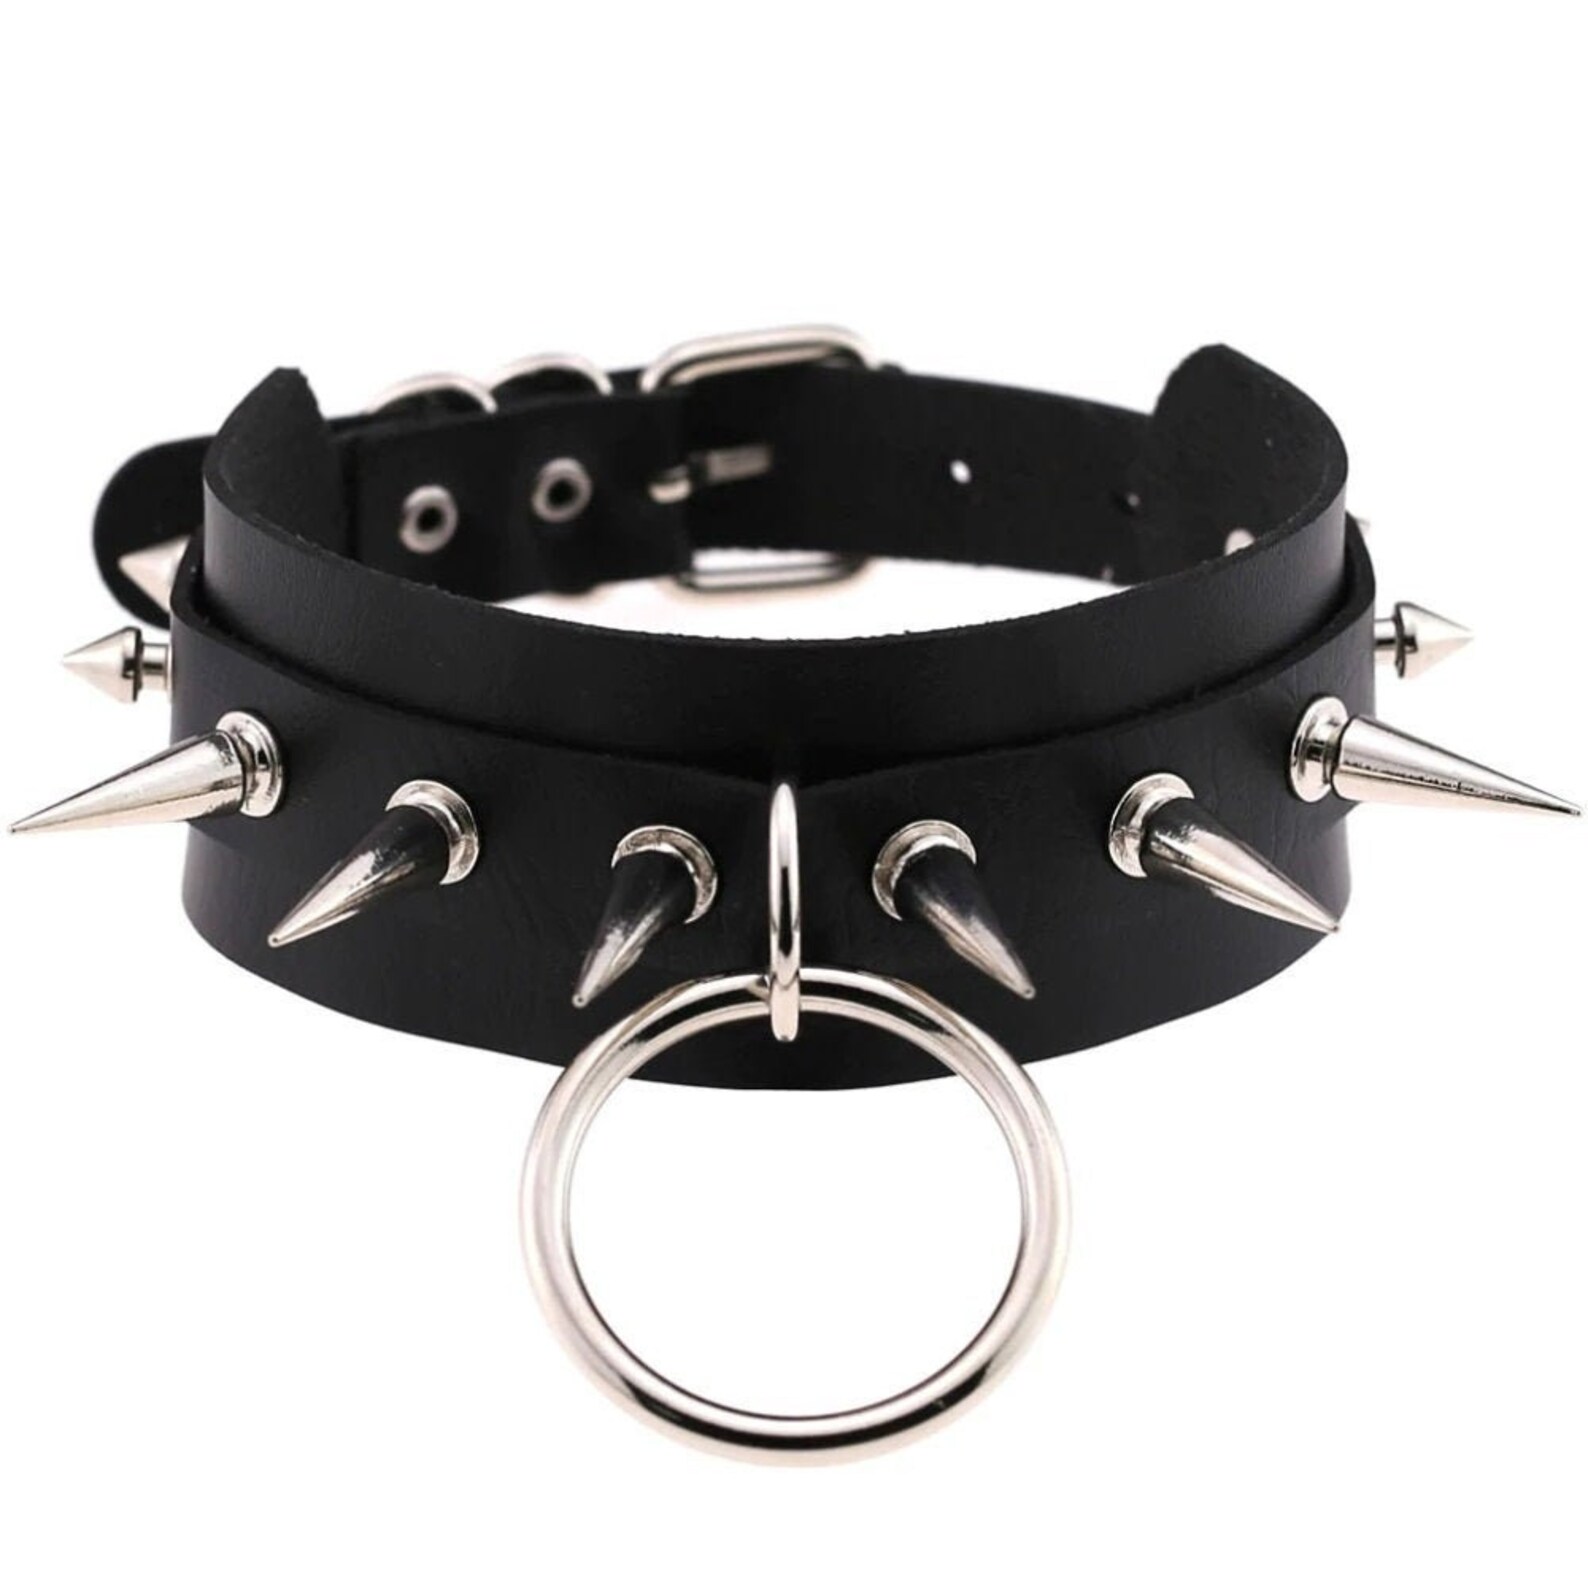 Black leather bdsm collar